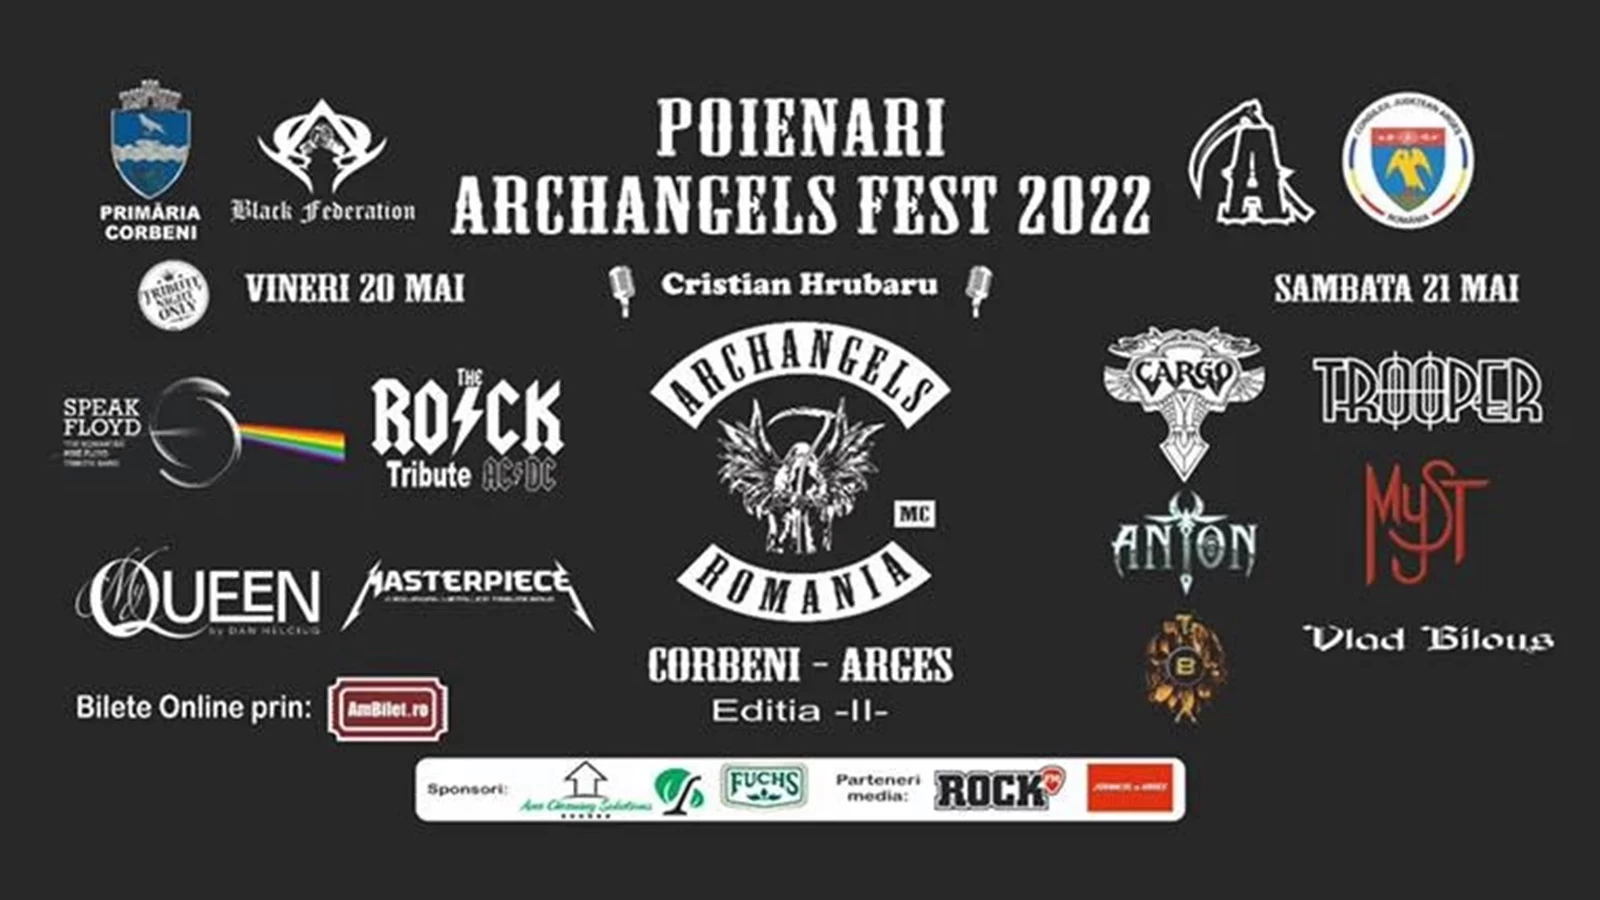 Poienari Archangels Fest 2022 @CARGO